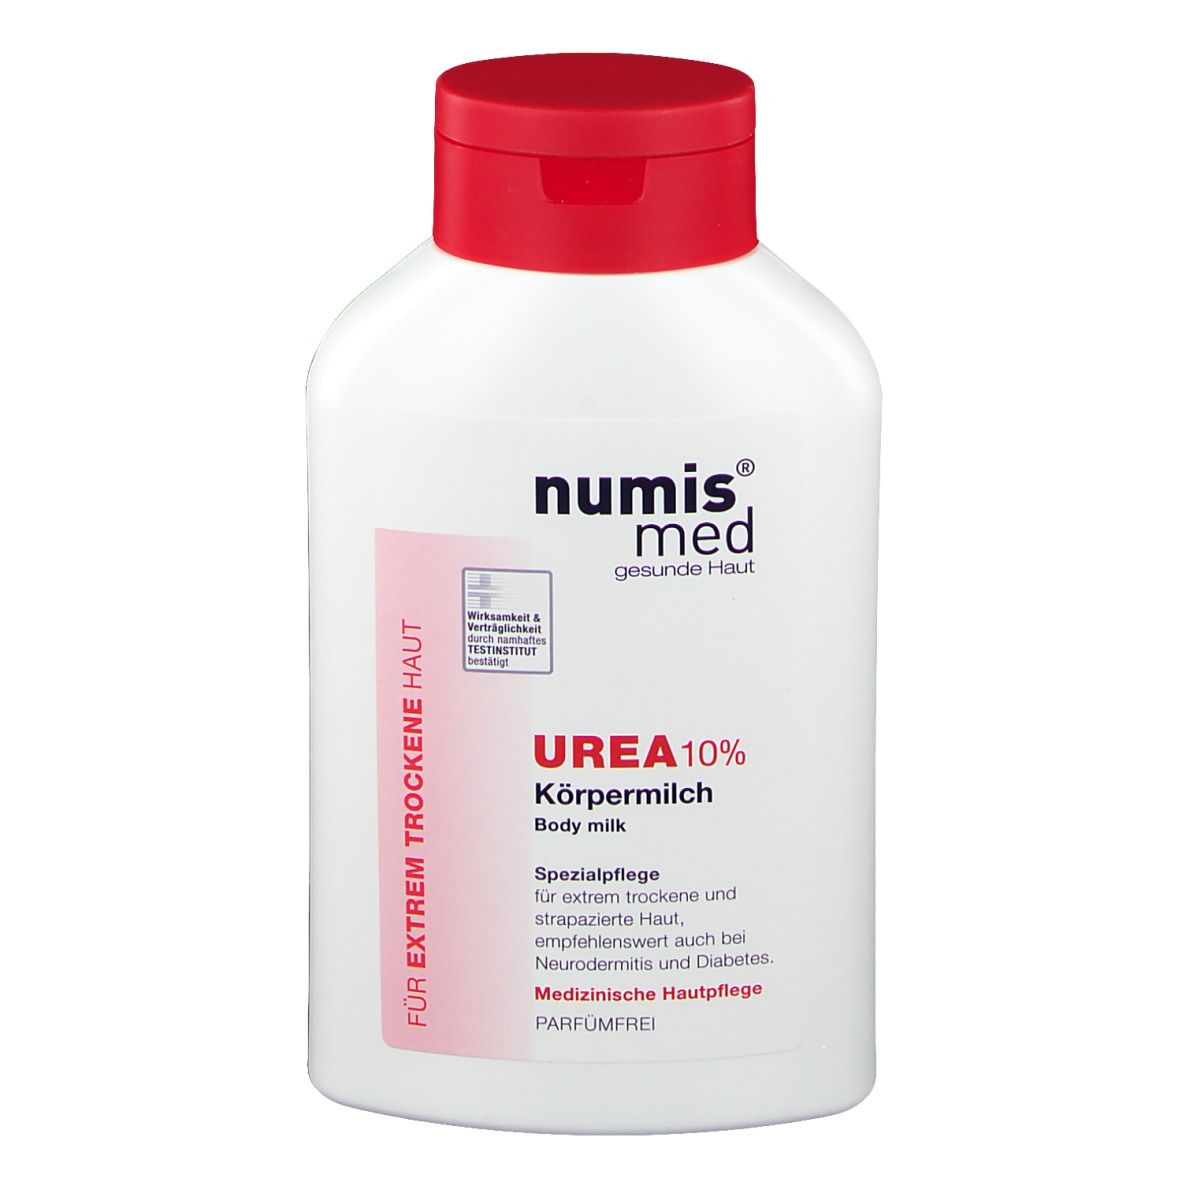 numis® med UREA 10% Körpermilch